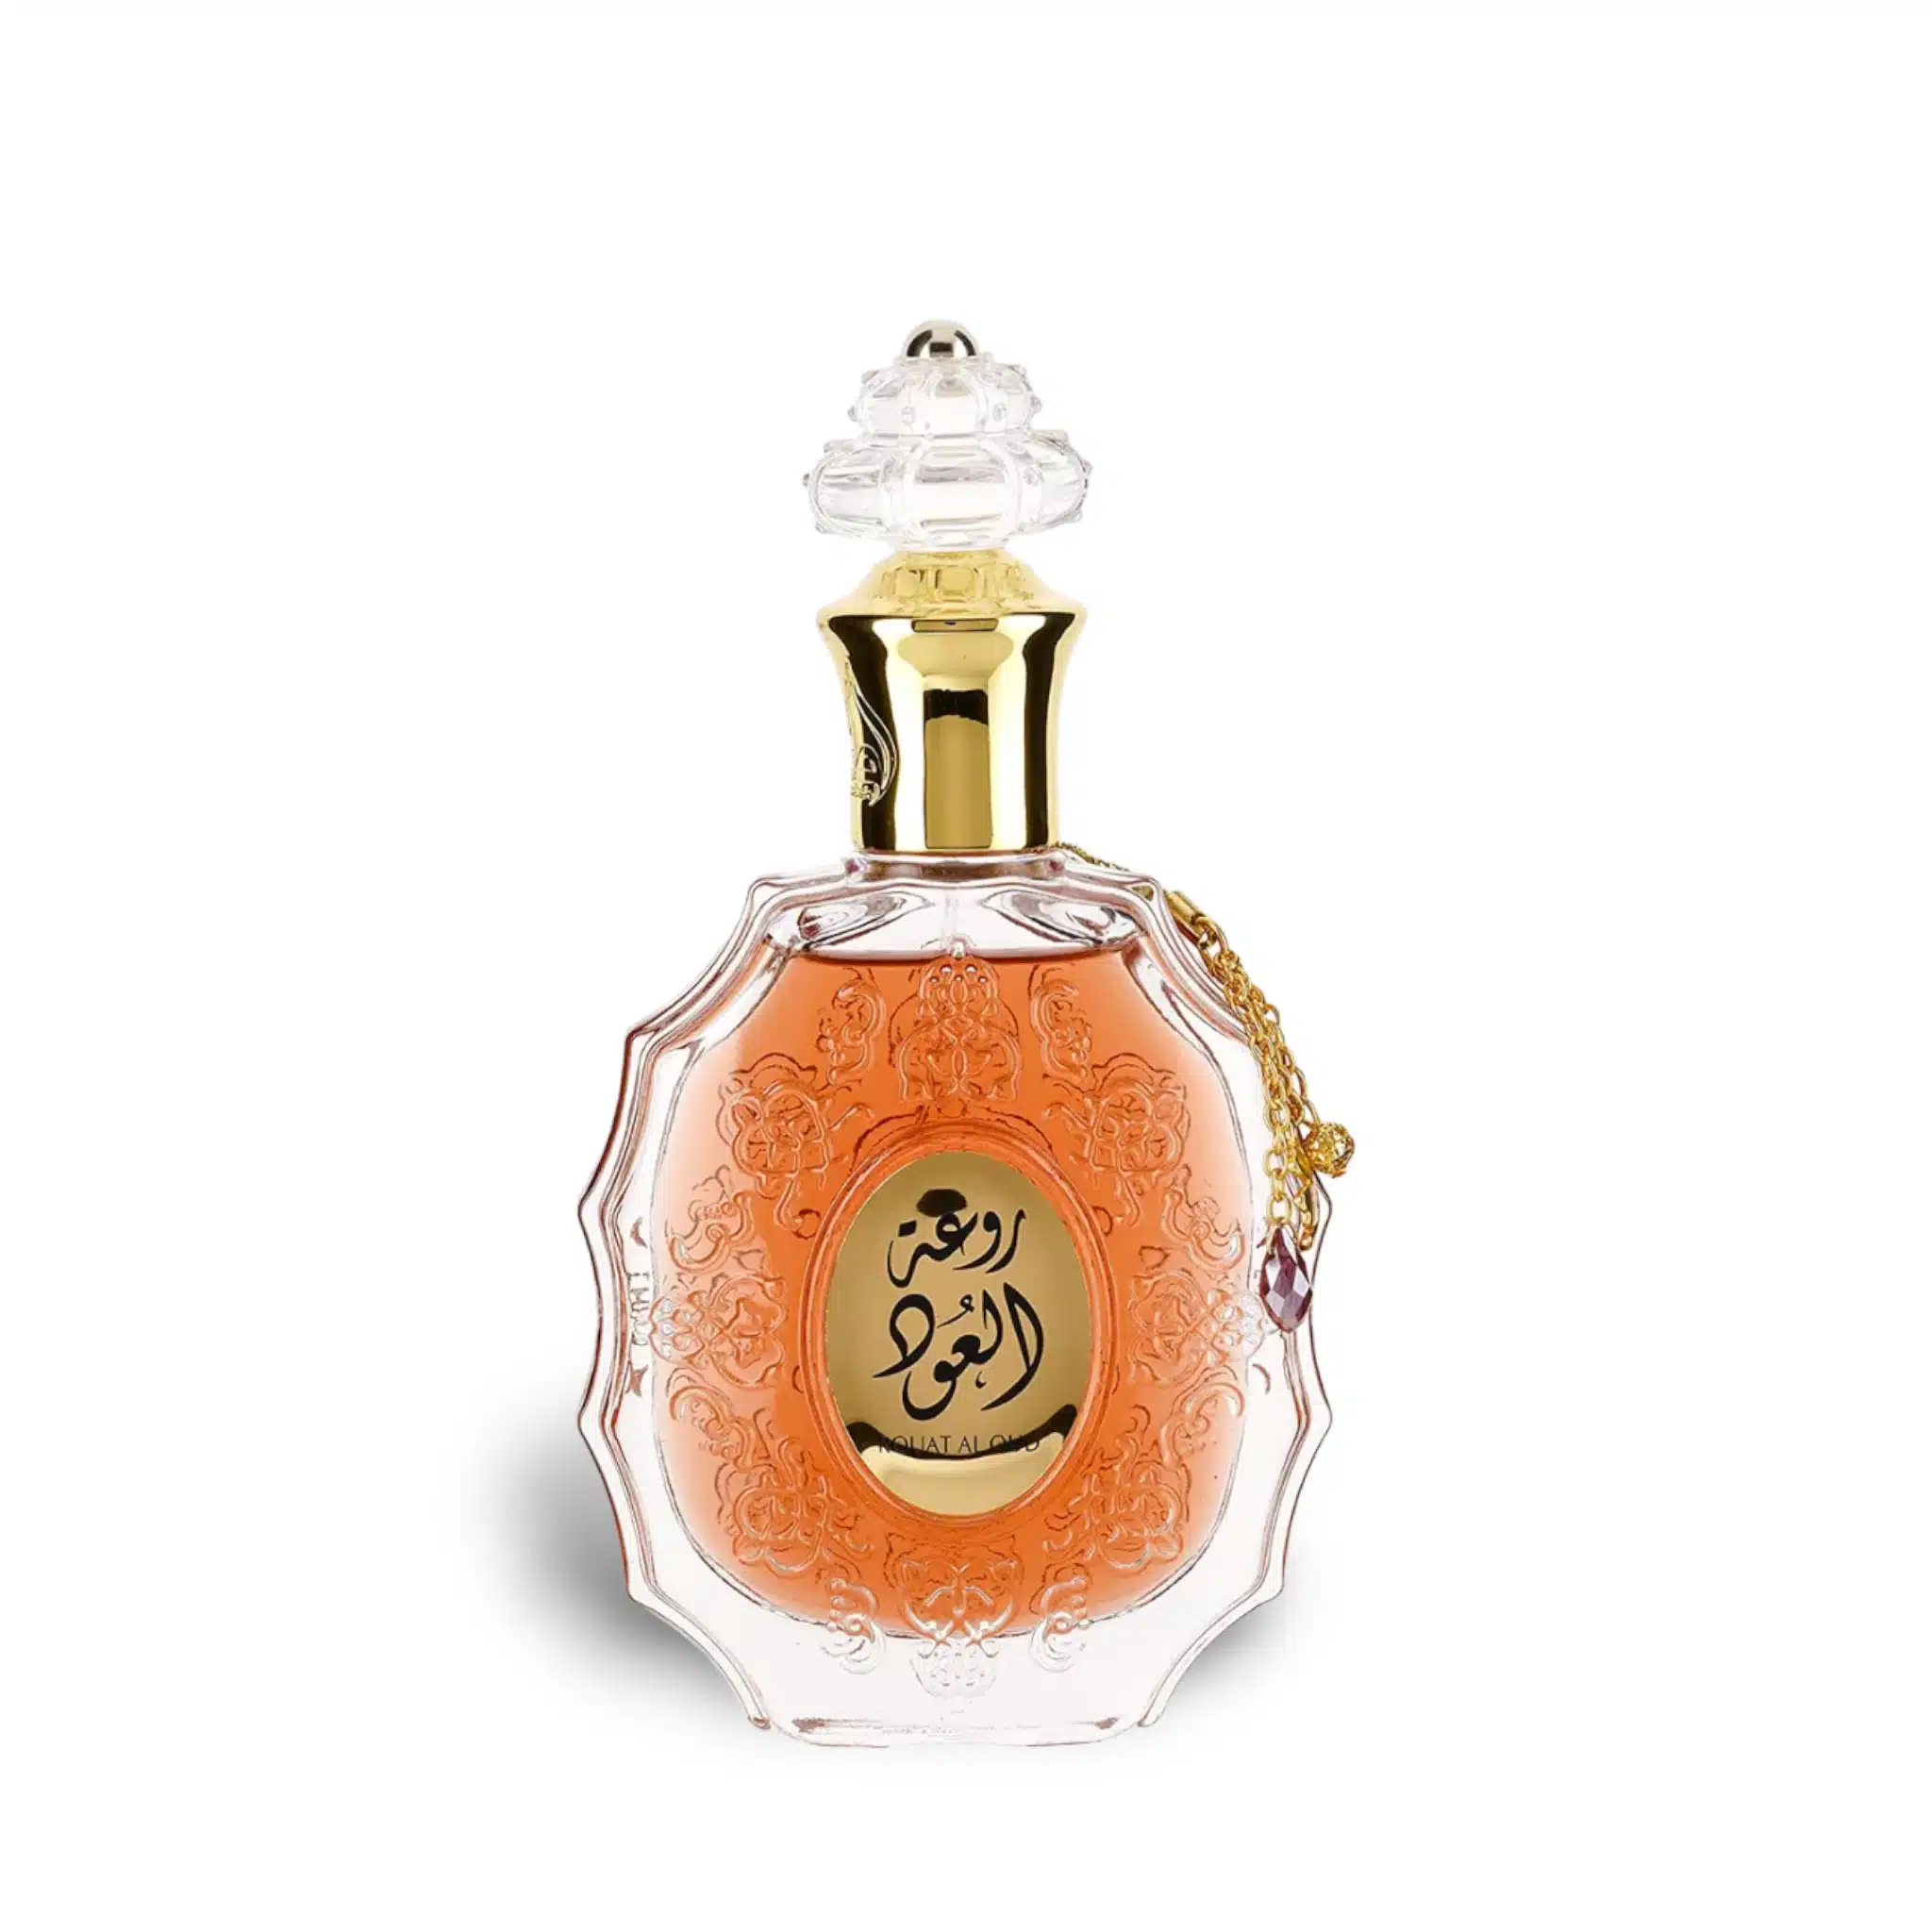 Rouat Al Oud Perfume Eau De Parfum 100Ml By Lattafa